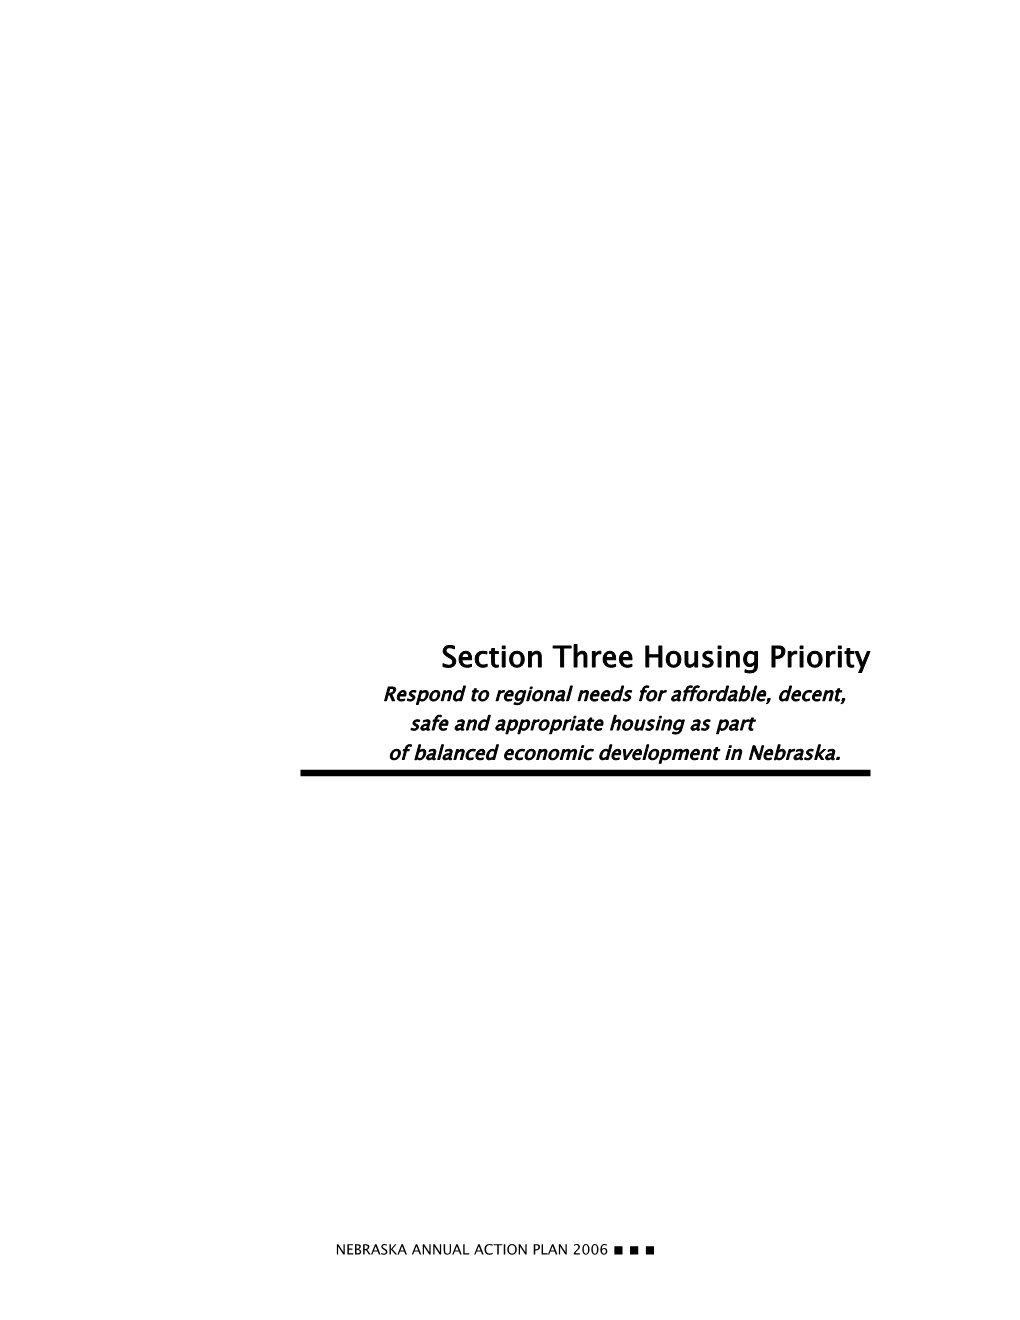 Housing Development Priority